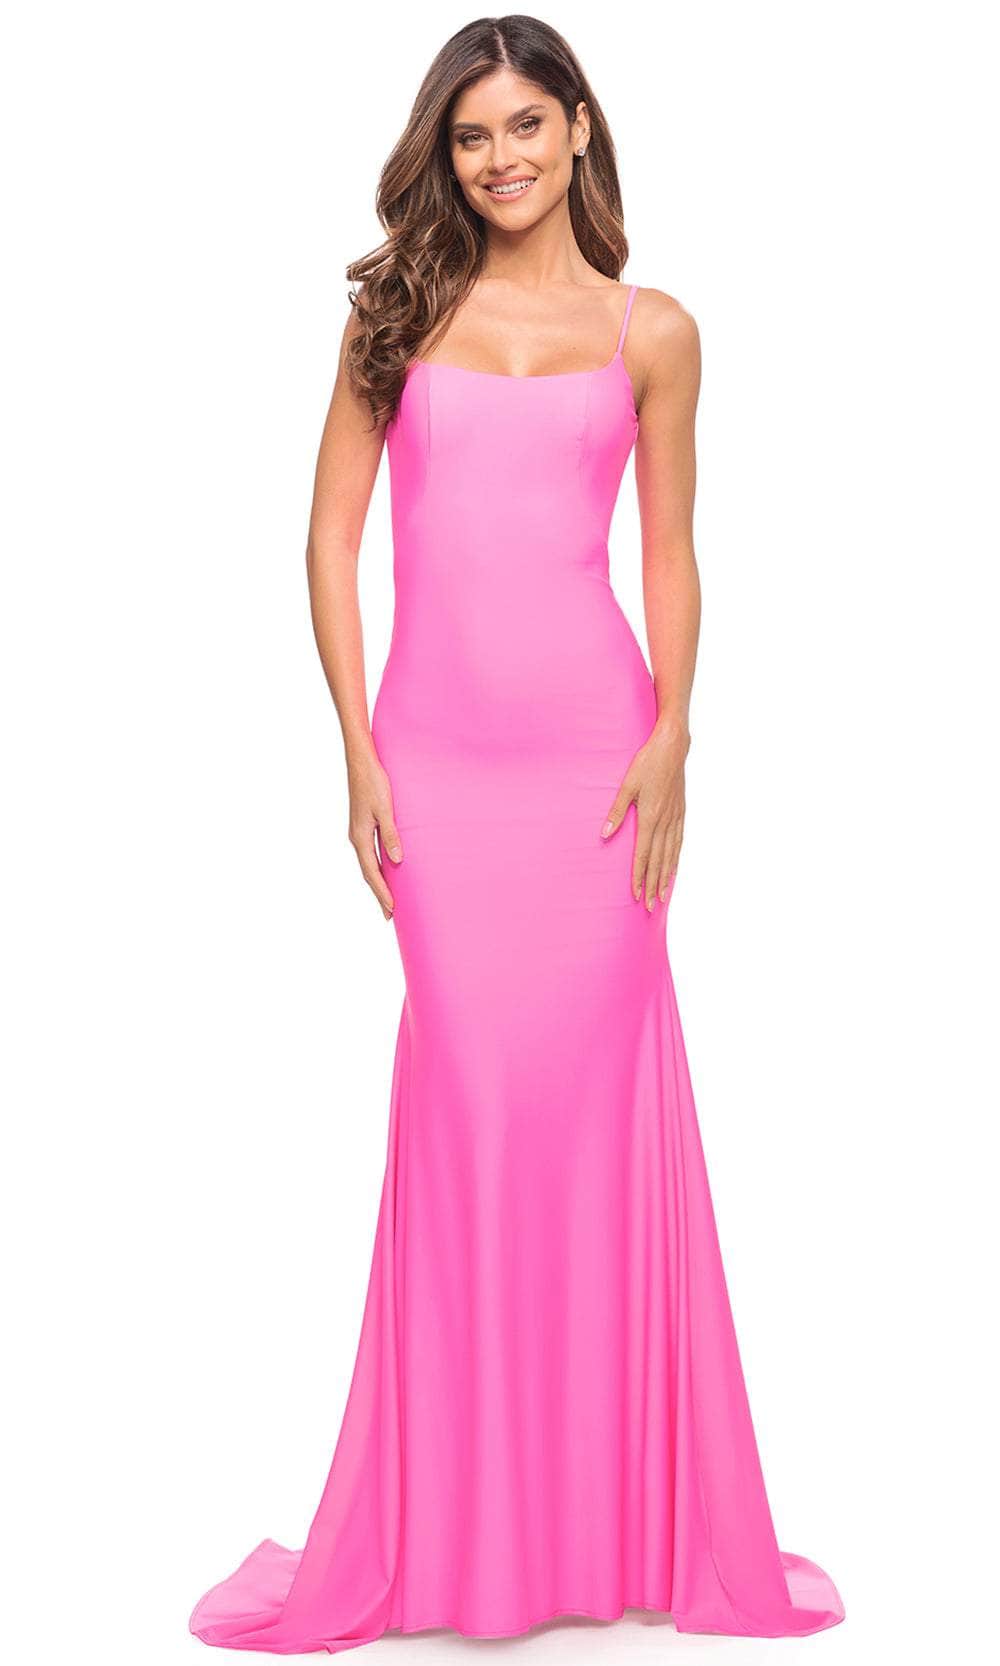 La Femme 30682 - Neon Trumpet Evening Dress Special Occasion Dress 00 / Hot Pink